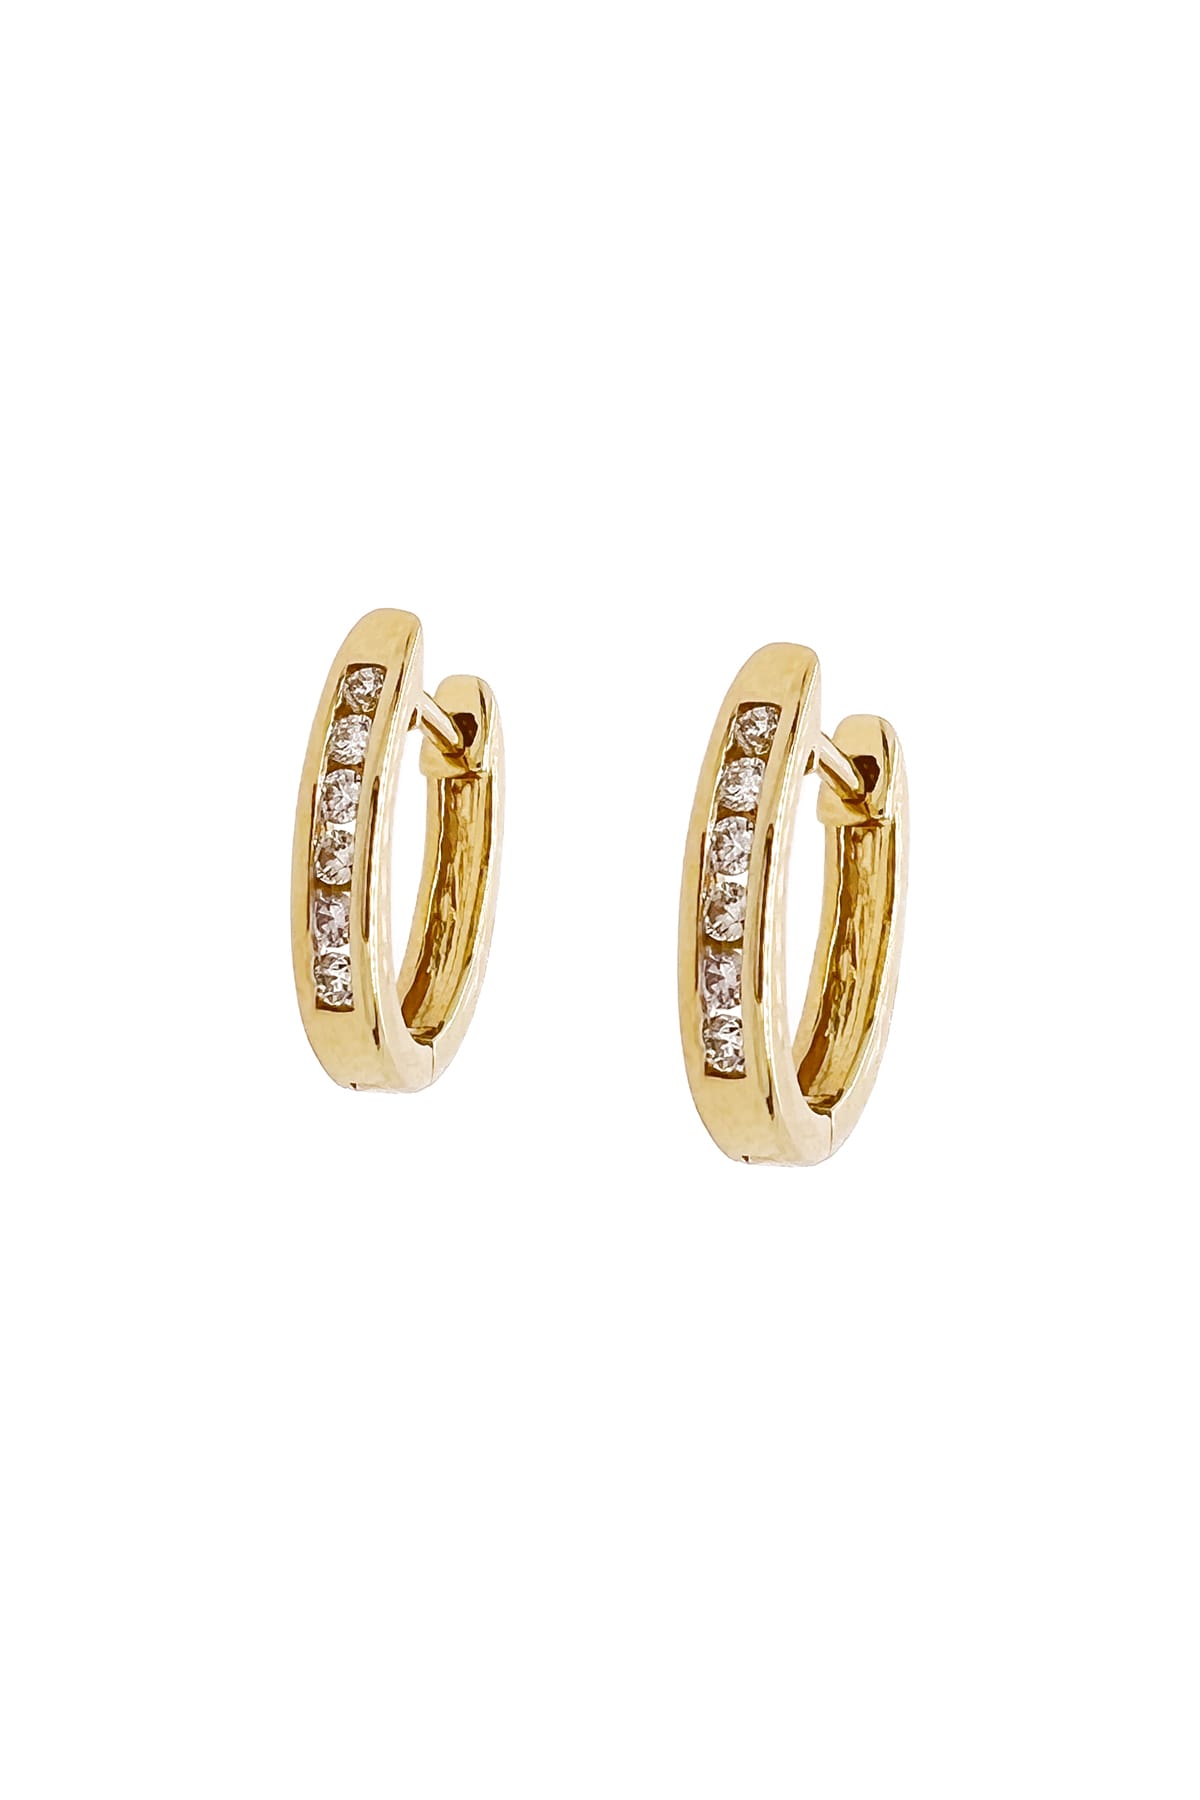 9 Carat Yellow Gold Diamond Set Oval Hoop Earrings available at LeGassick Diamonds and Jewellery Gold Coast, Australia.